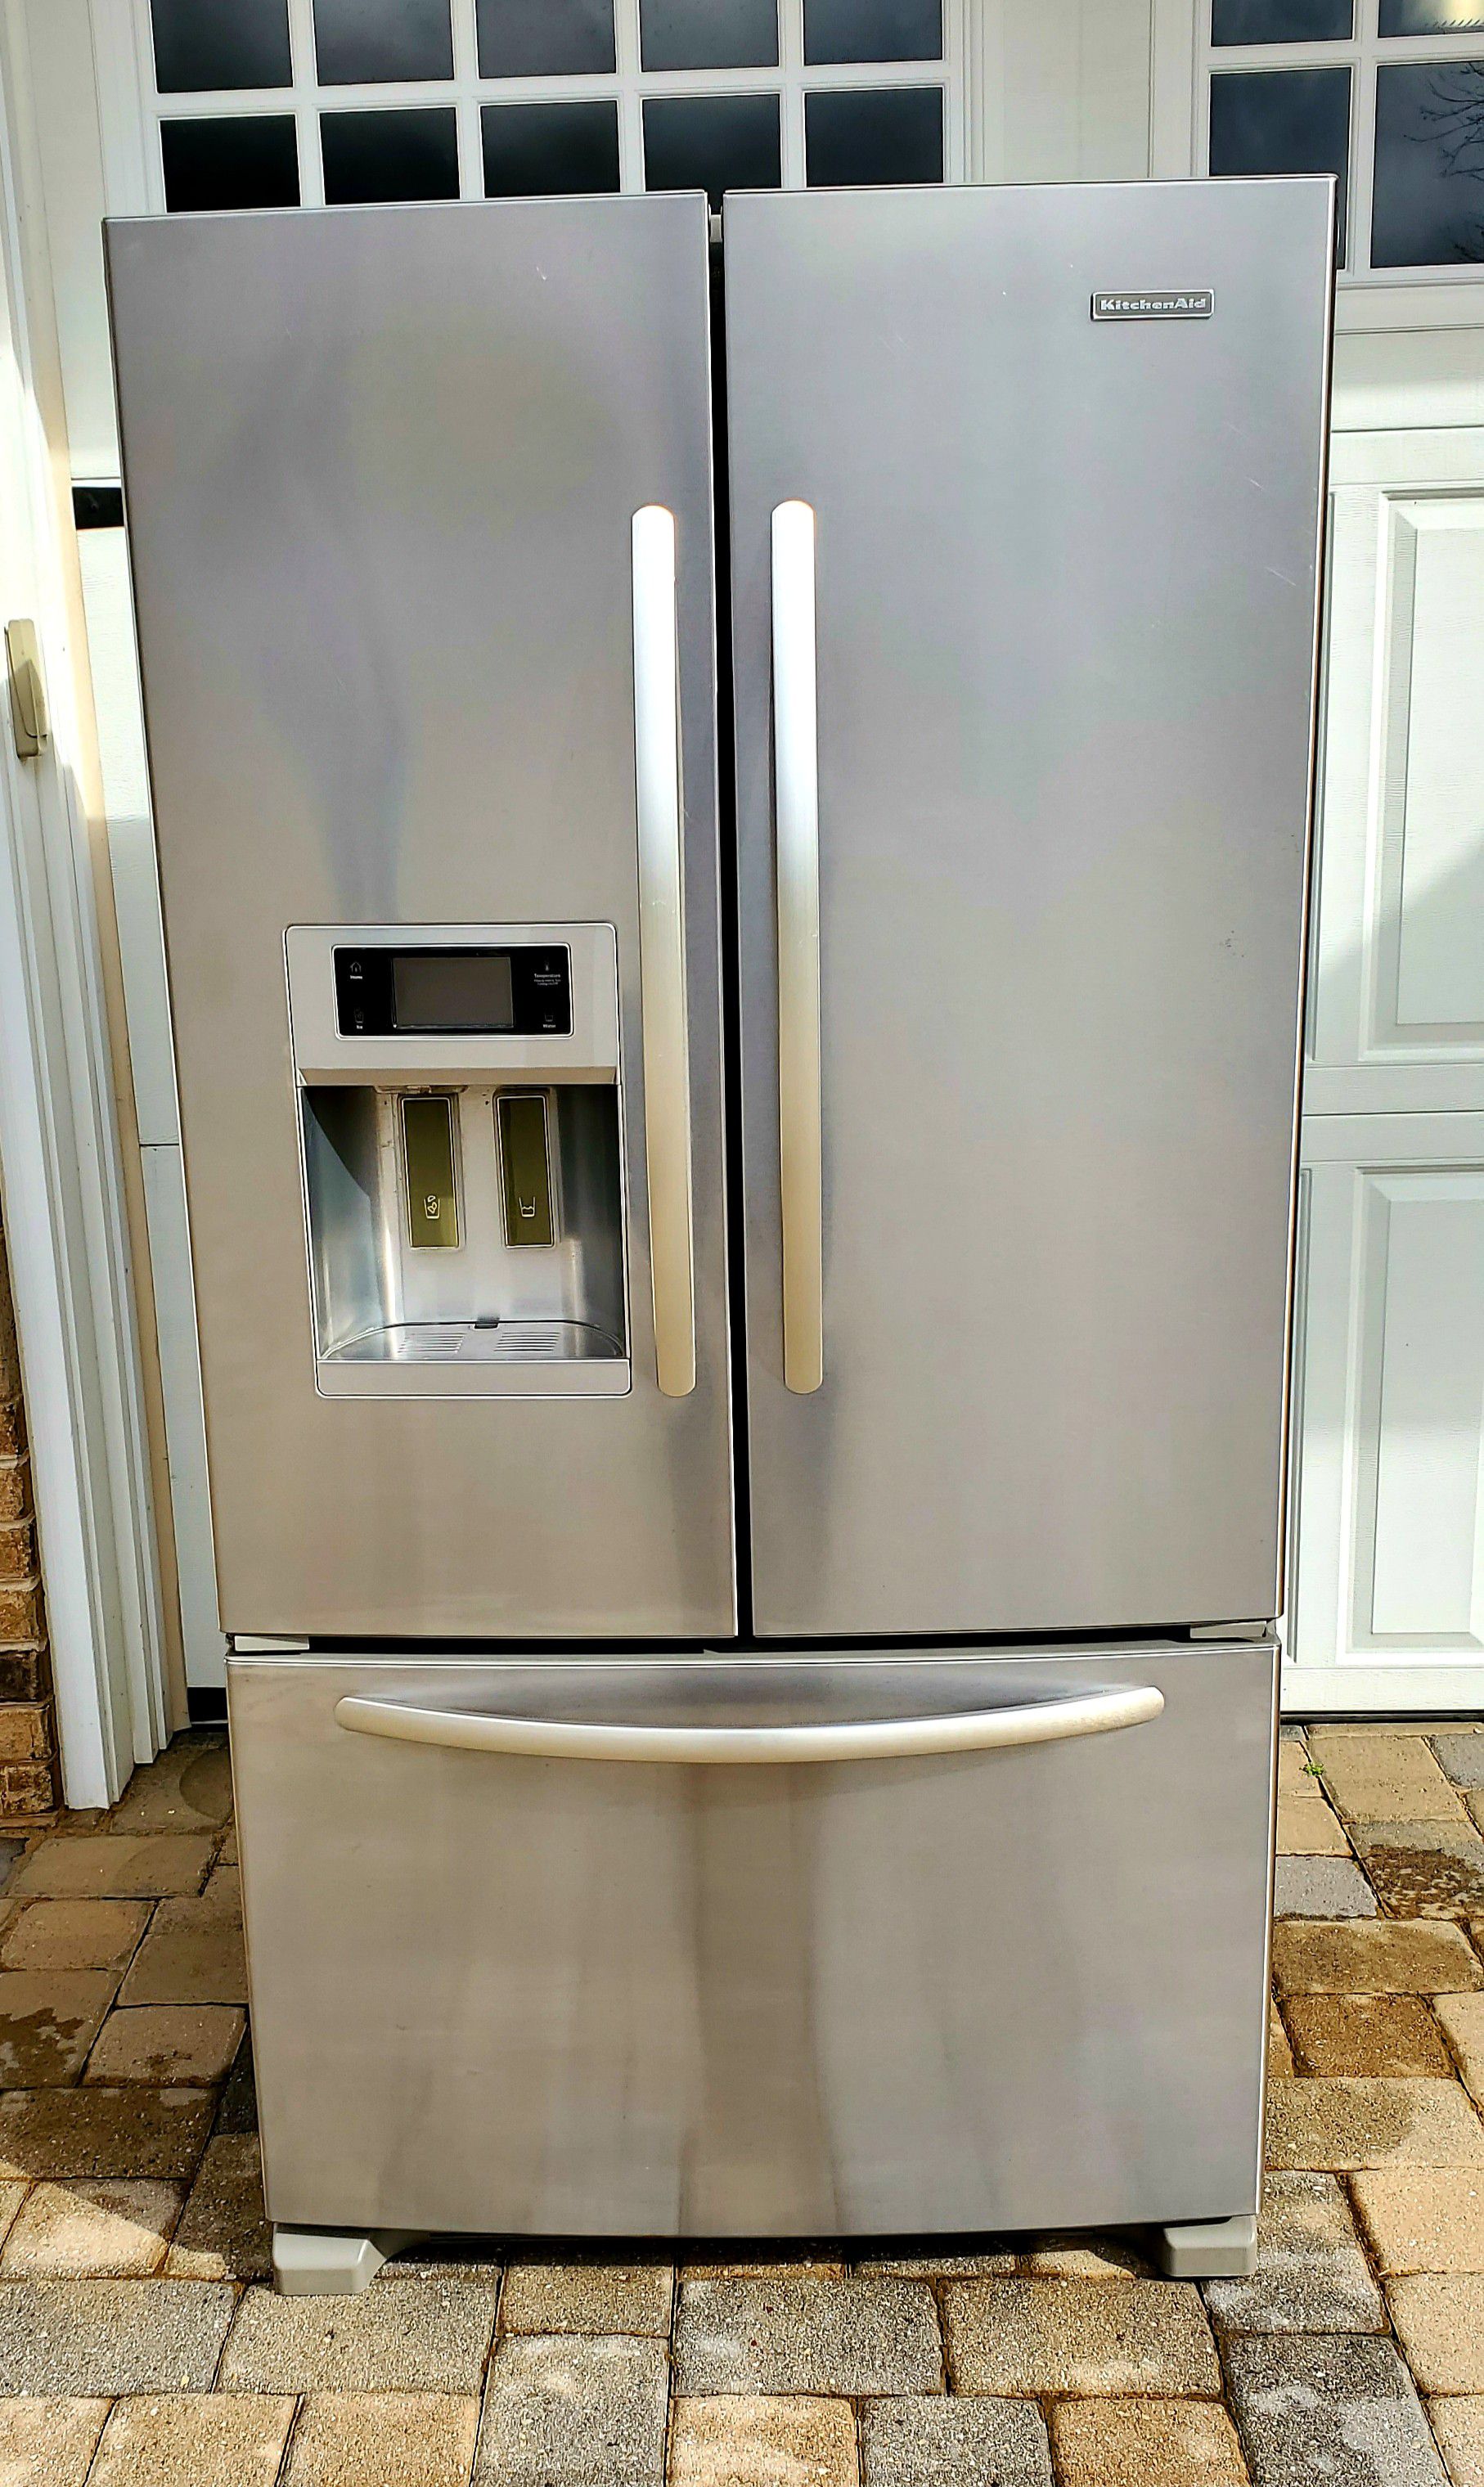 KitchenAid 27 cubic foot Refrigerator for Sale in Virginia Beach, VA ...